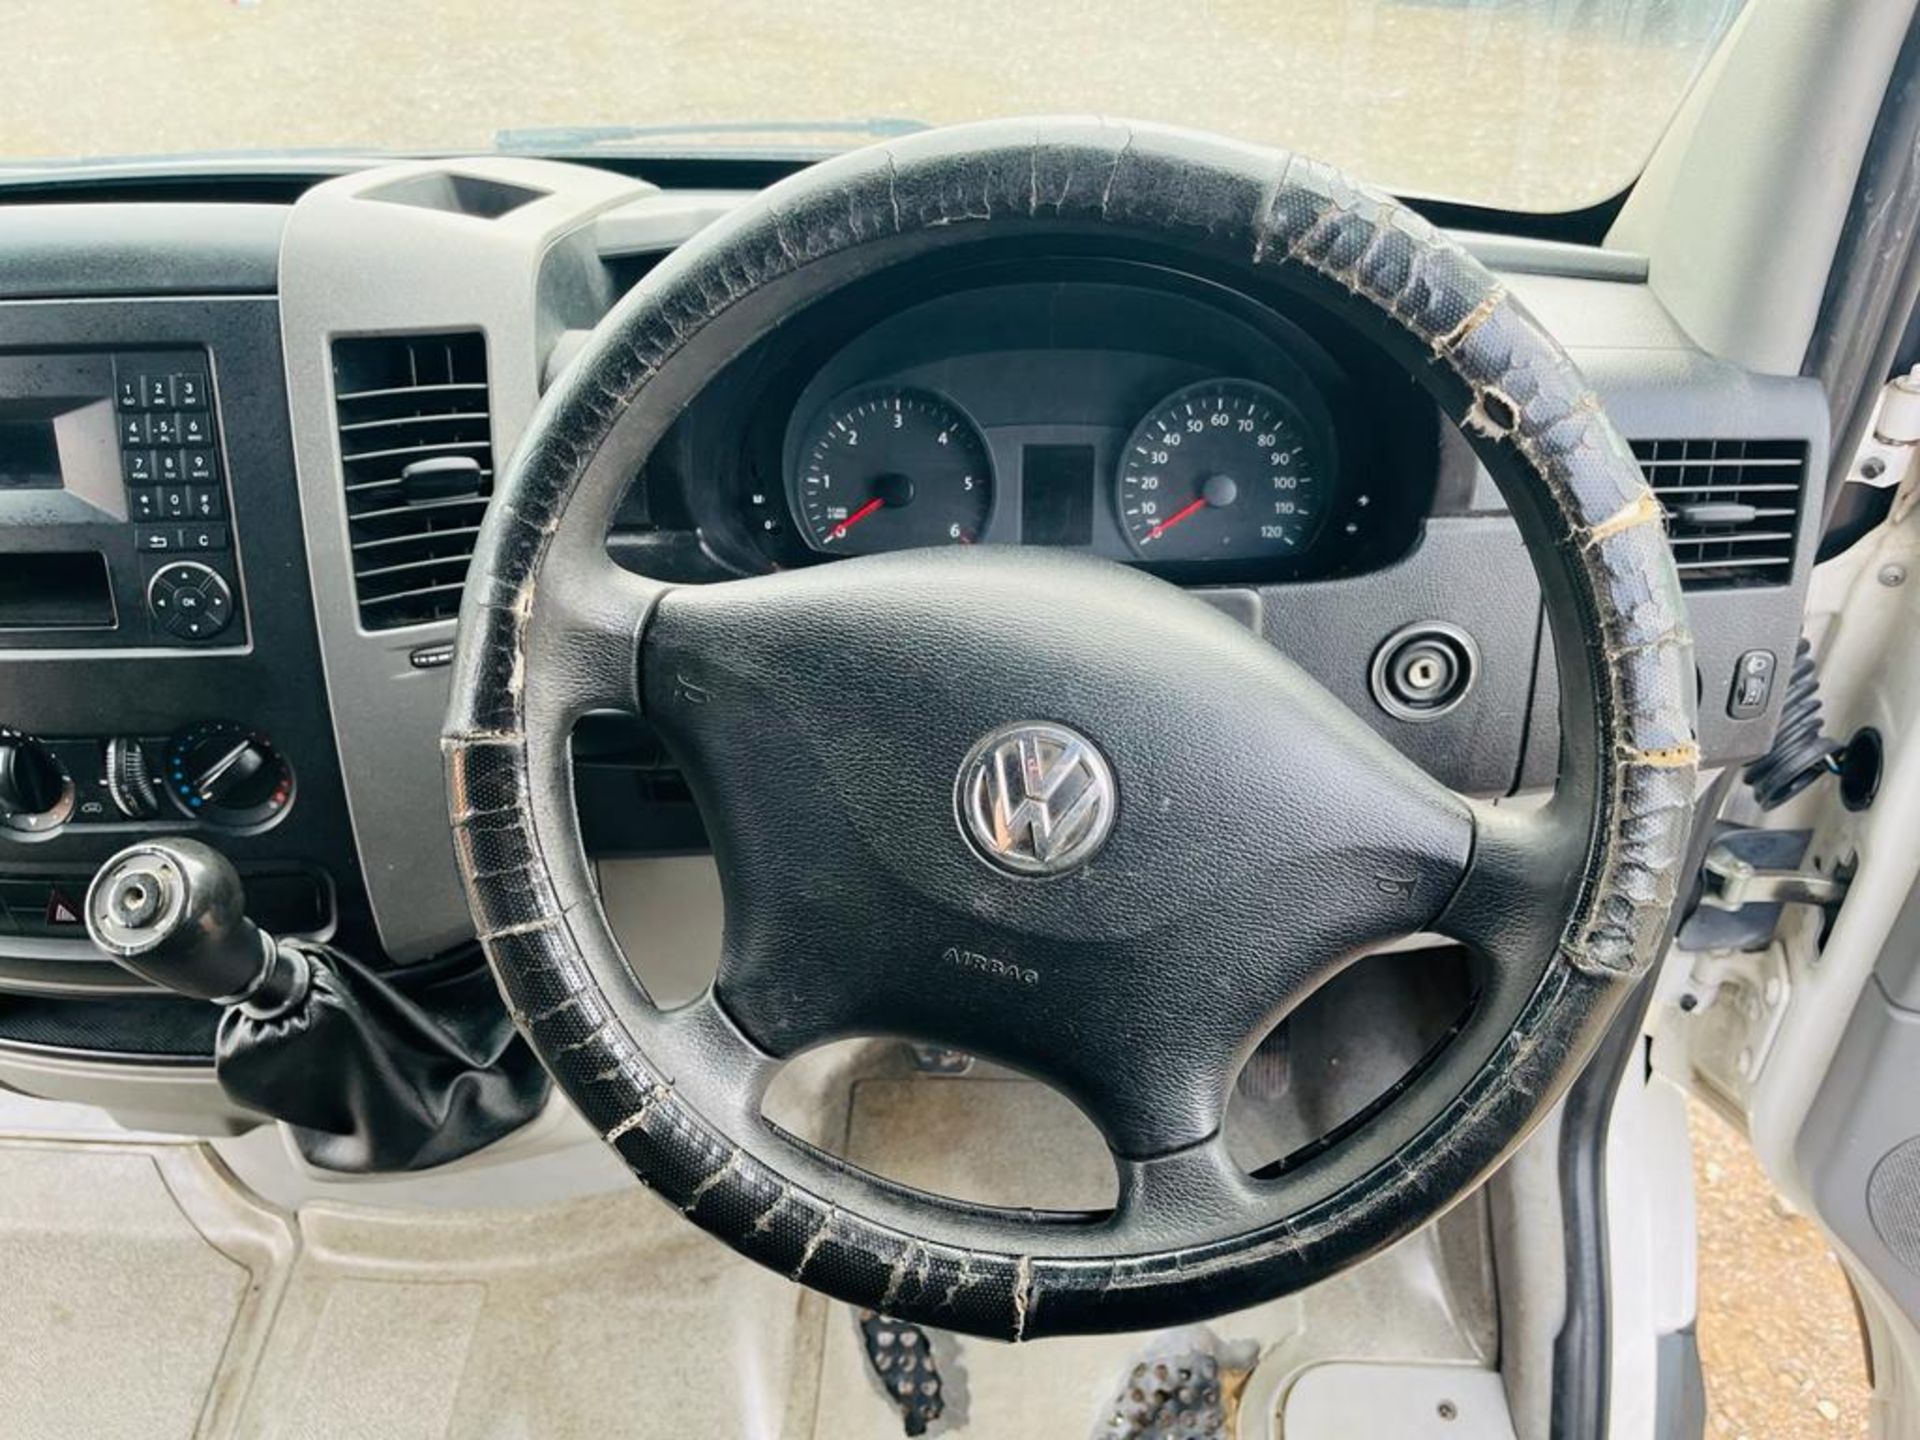 Volkswagen Crafter Startline Tdi 136 L3 H2 2015 (65 Reg) - Bluetooth Handsfree - Long Wheel Base - Image 19 of 27